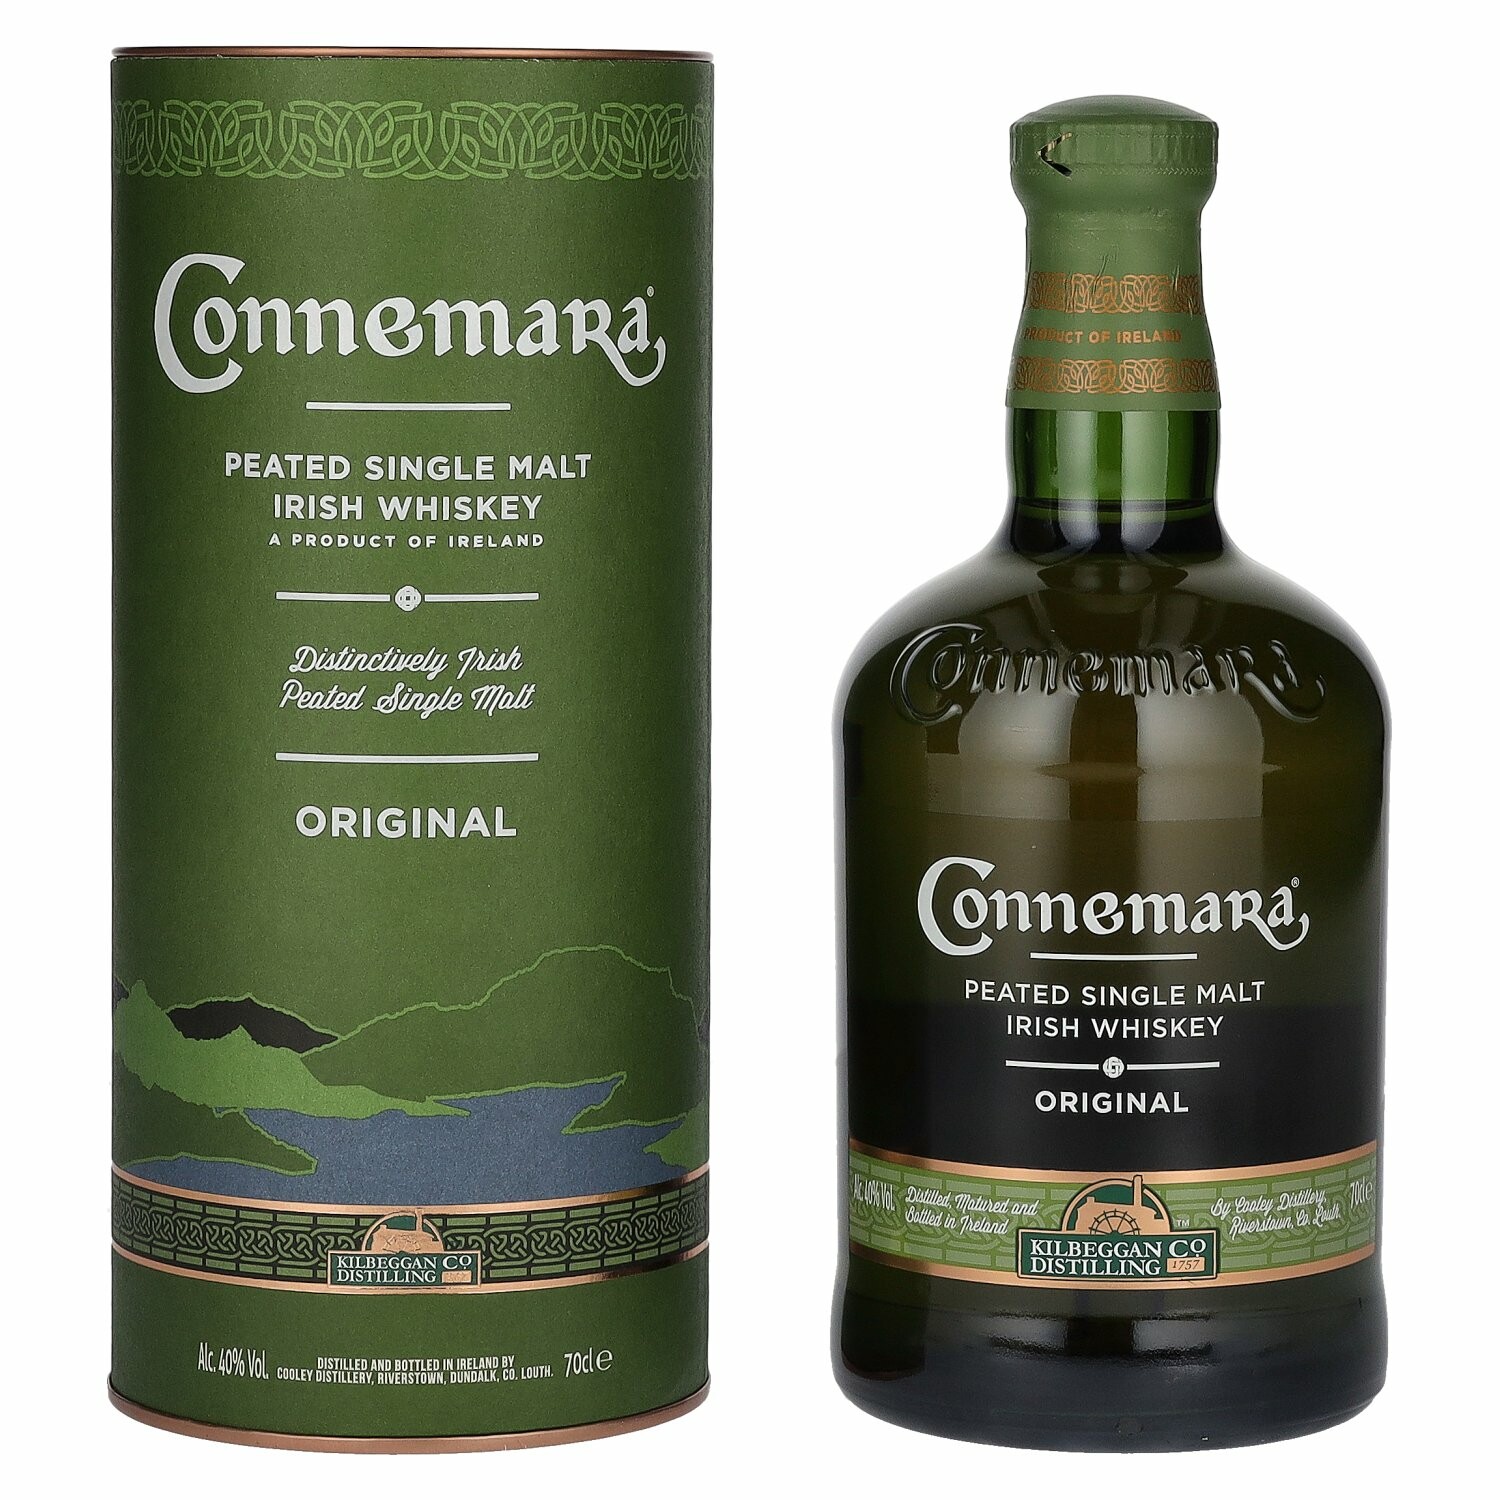 Connemara ORIGINAL Peated Single Malt Irish Whiskey 40% Vol. 0,7l in Giftbox